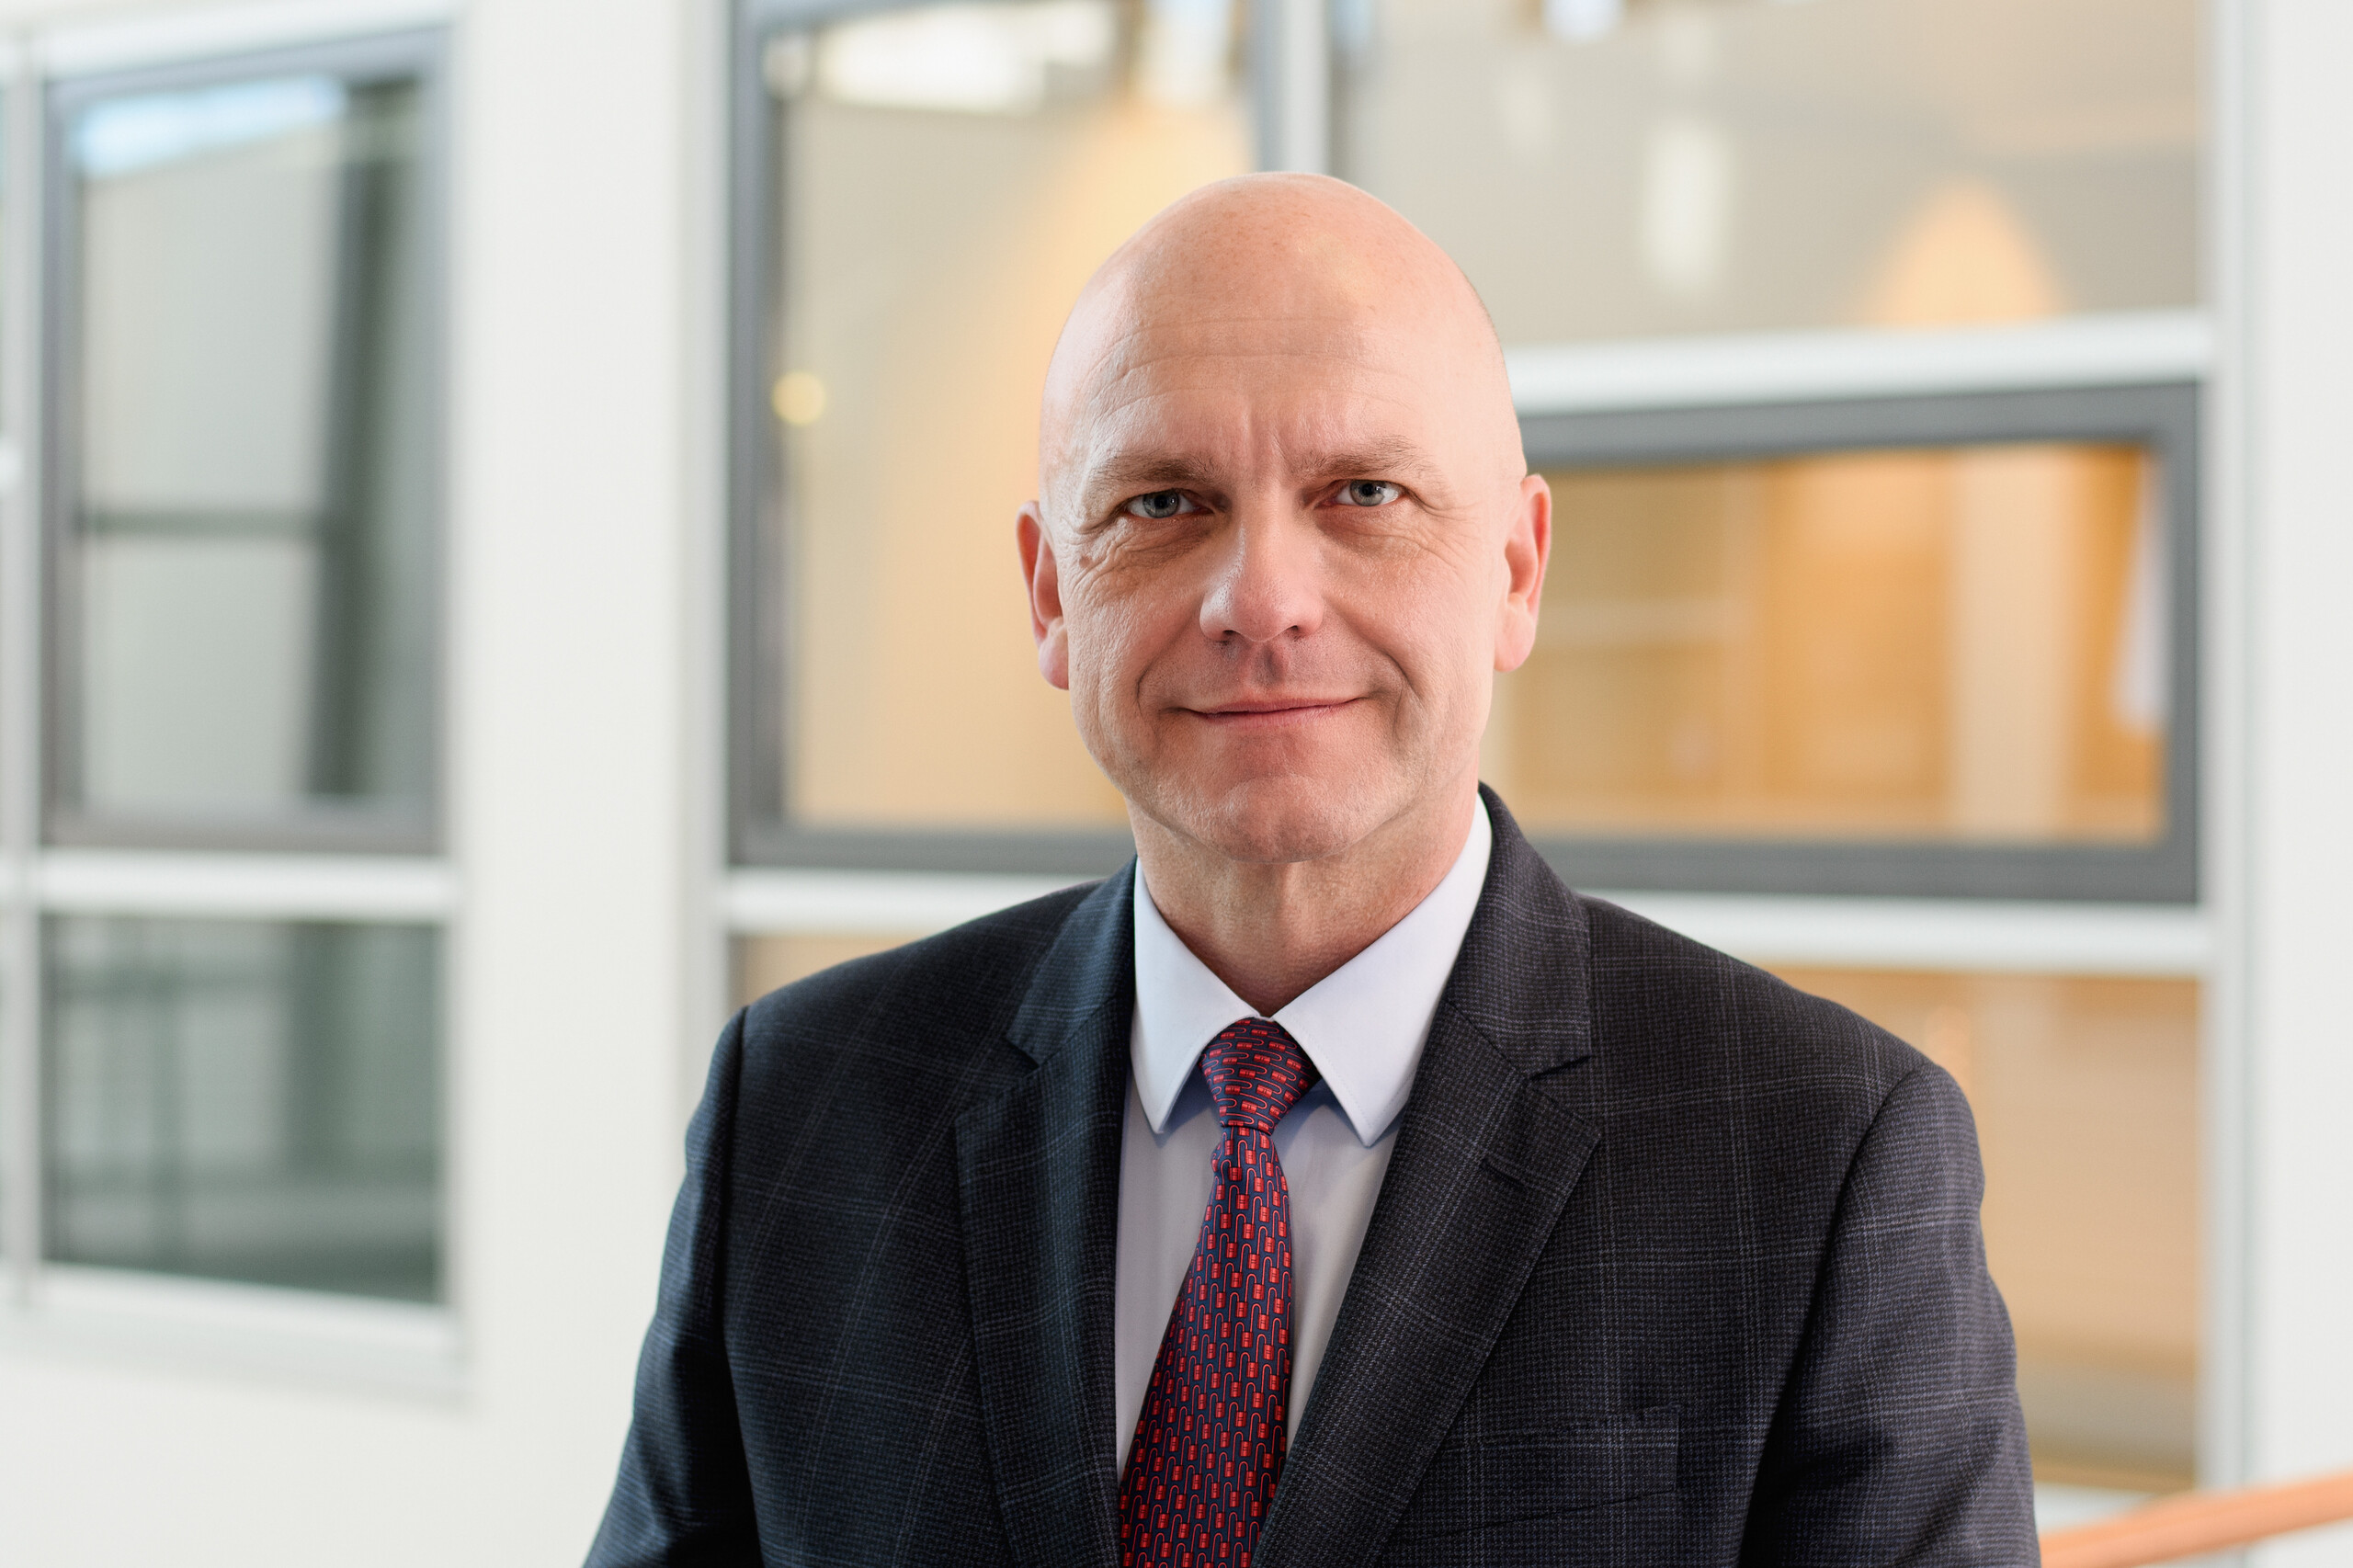 Alexander Gebauer, CEO of Allianz Real Estate for Western Europe